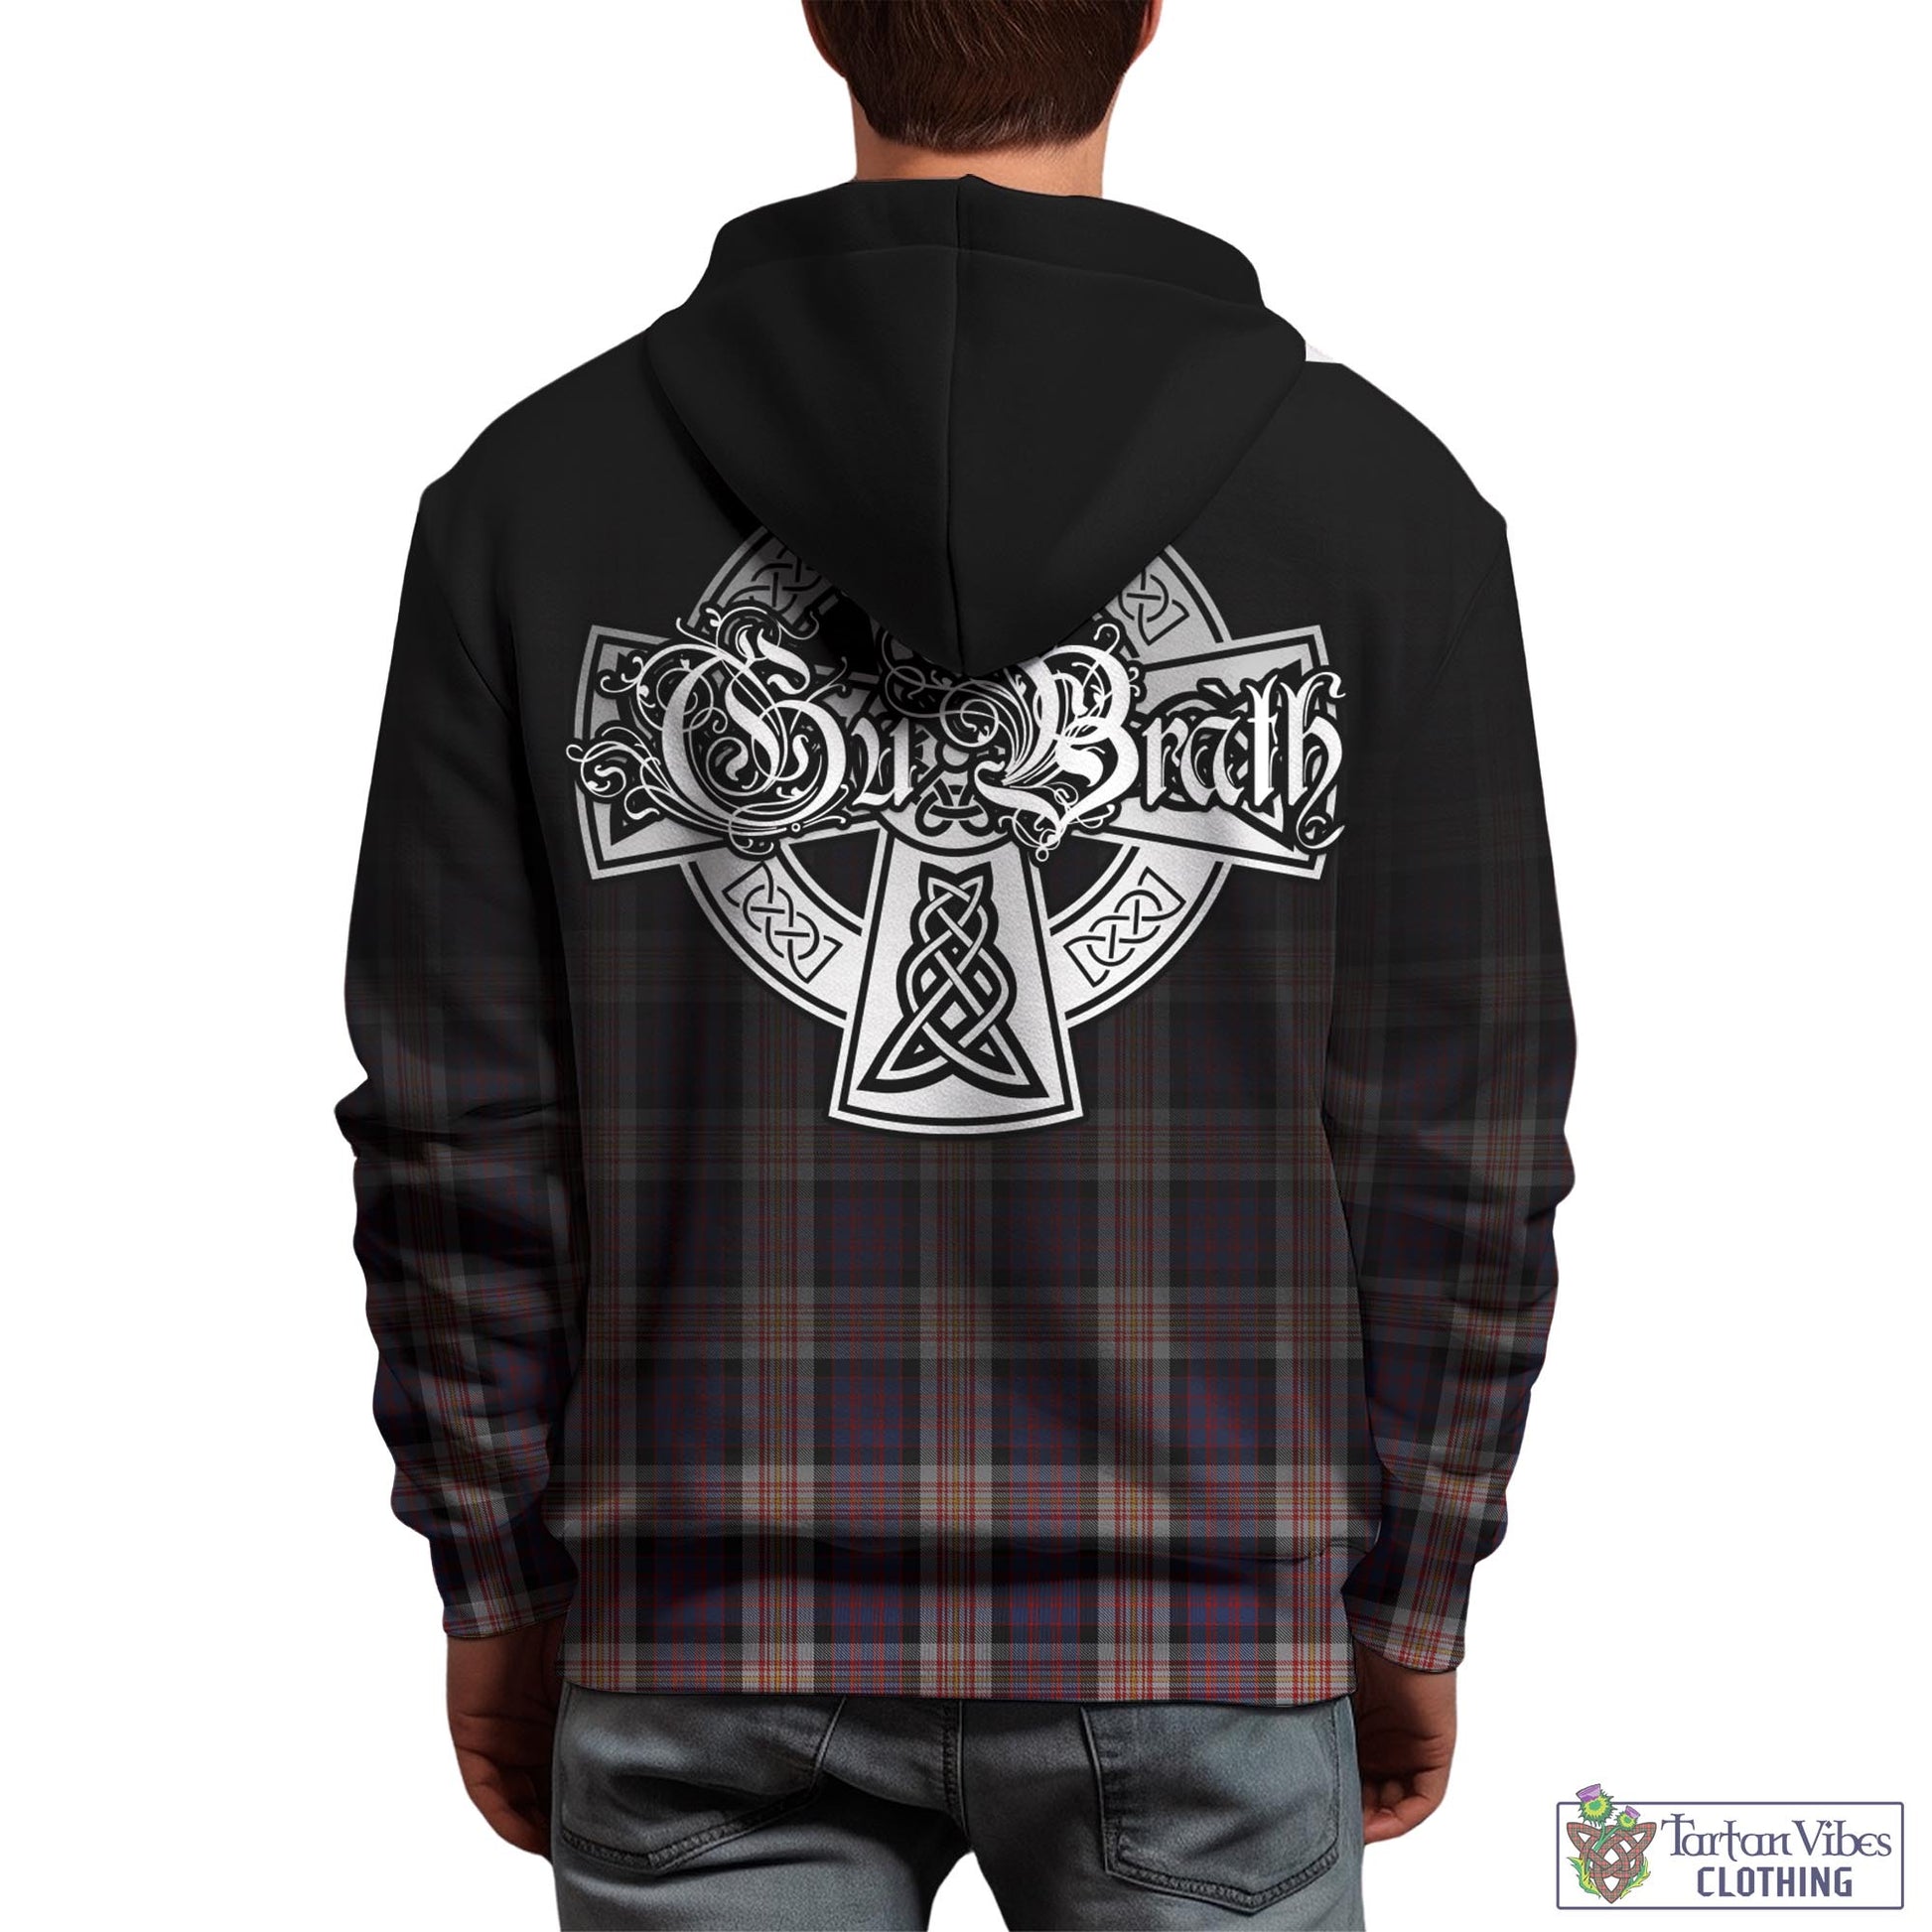 Tartan Vibes Clothing Carnegie Tartan Hoodie Featuring Alba Gu Brath Family Crest Celtic Inspired